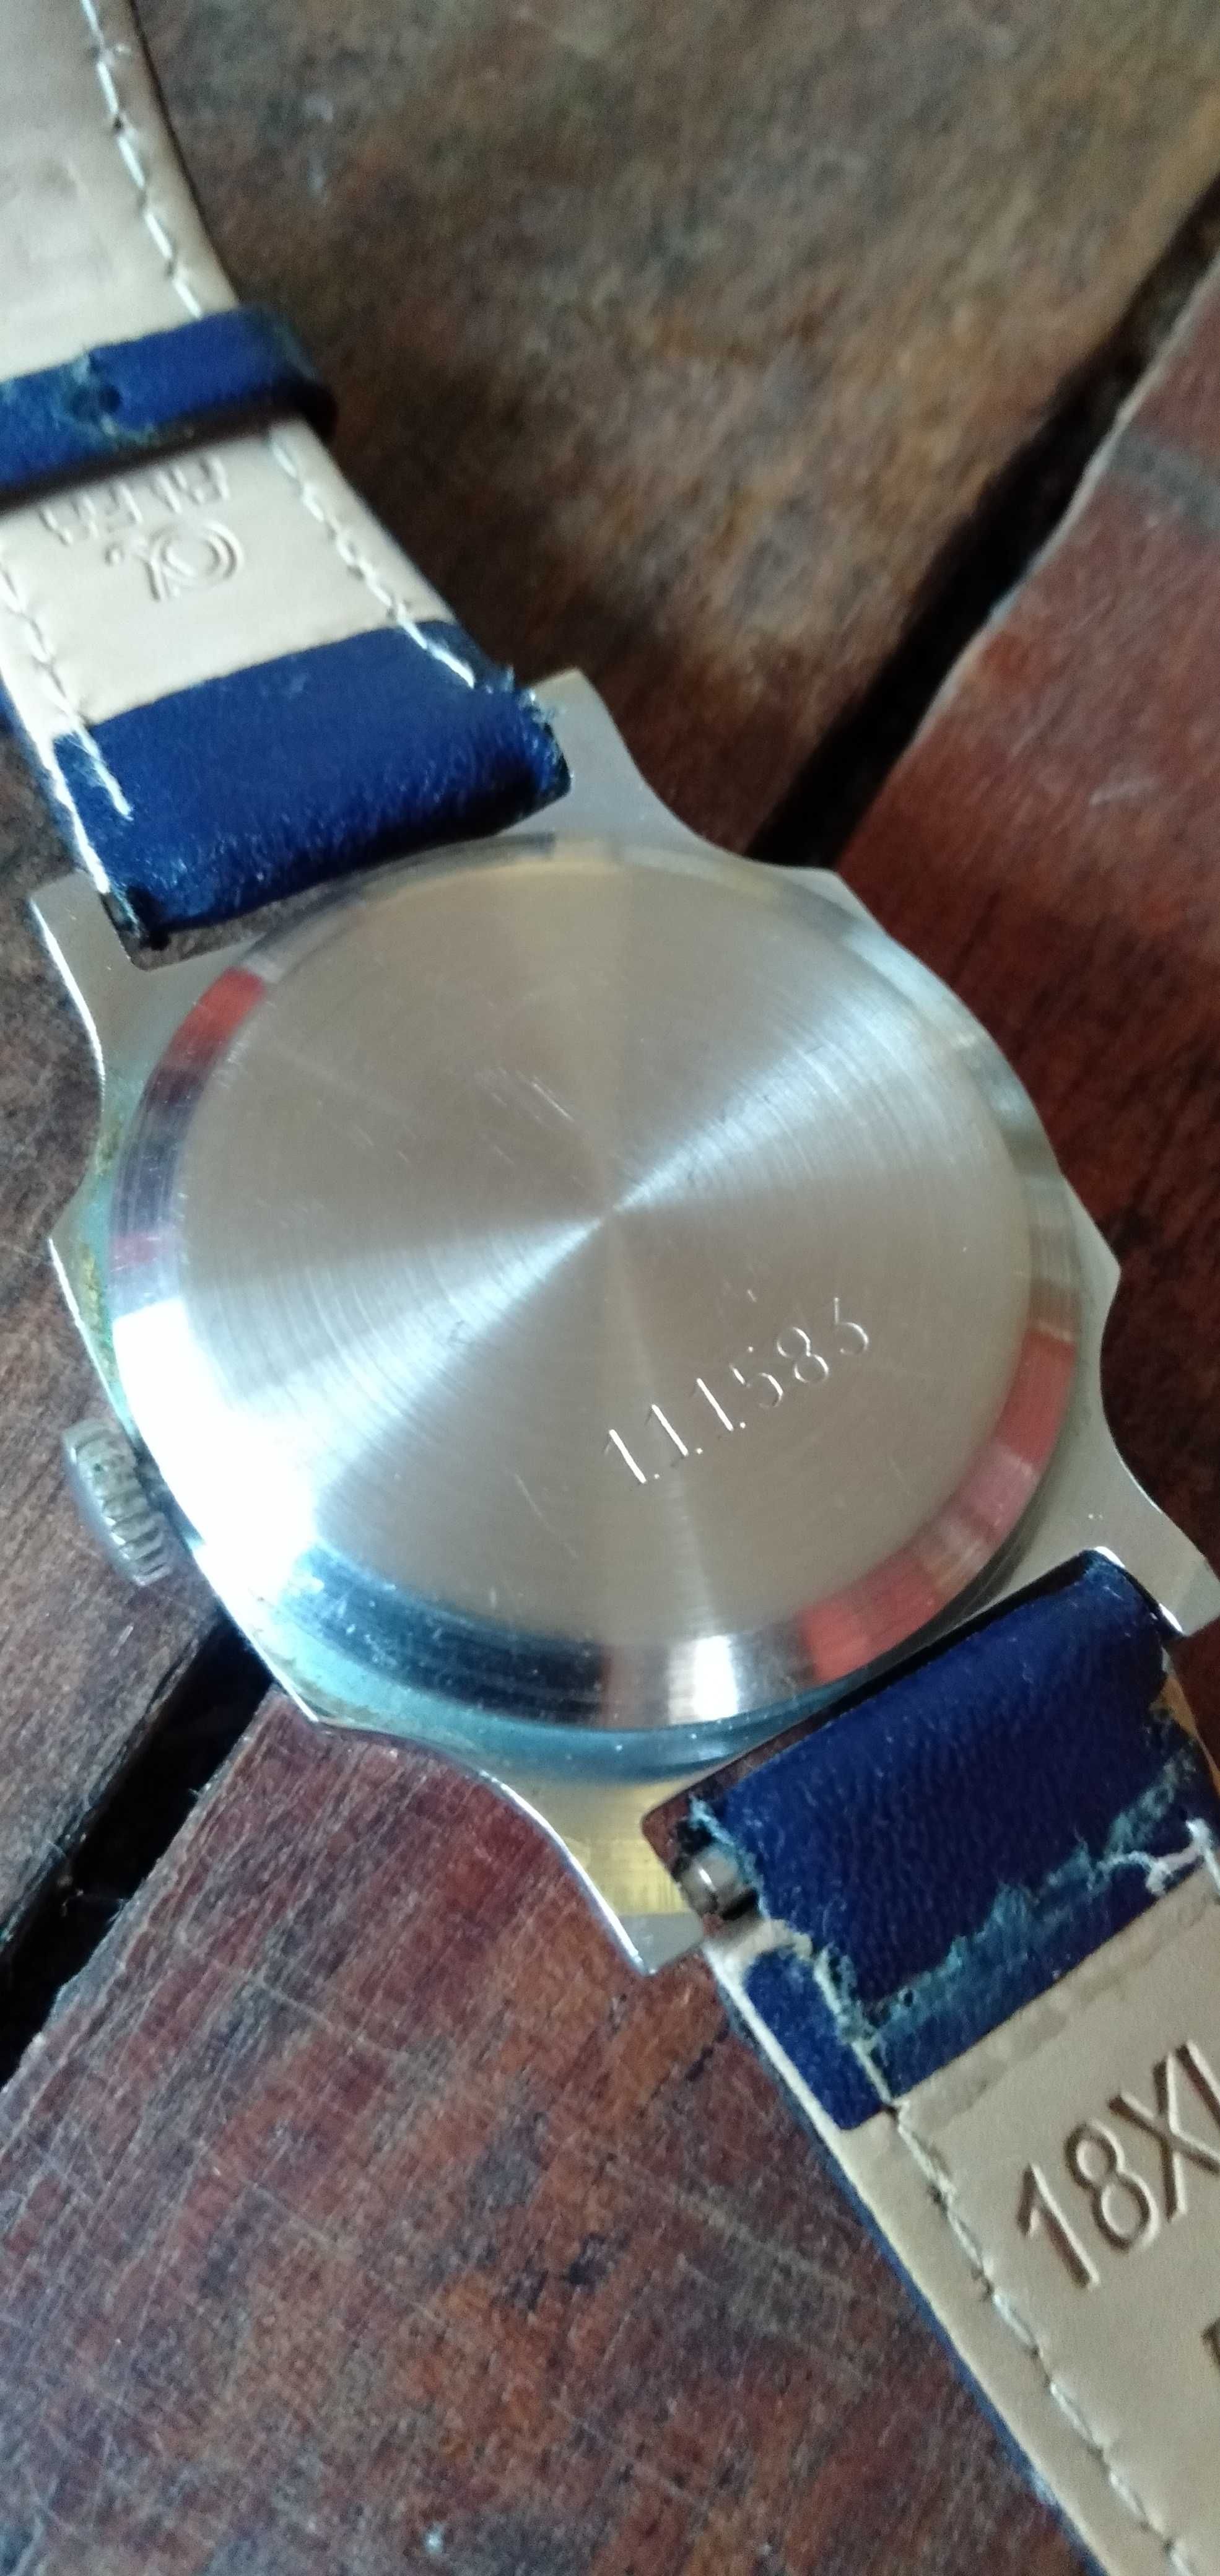 Zegarek radziecki pobieda